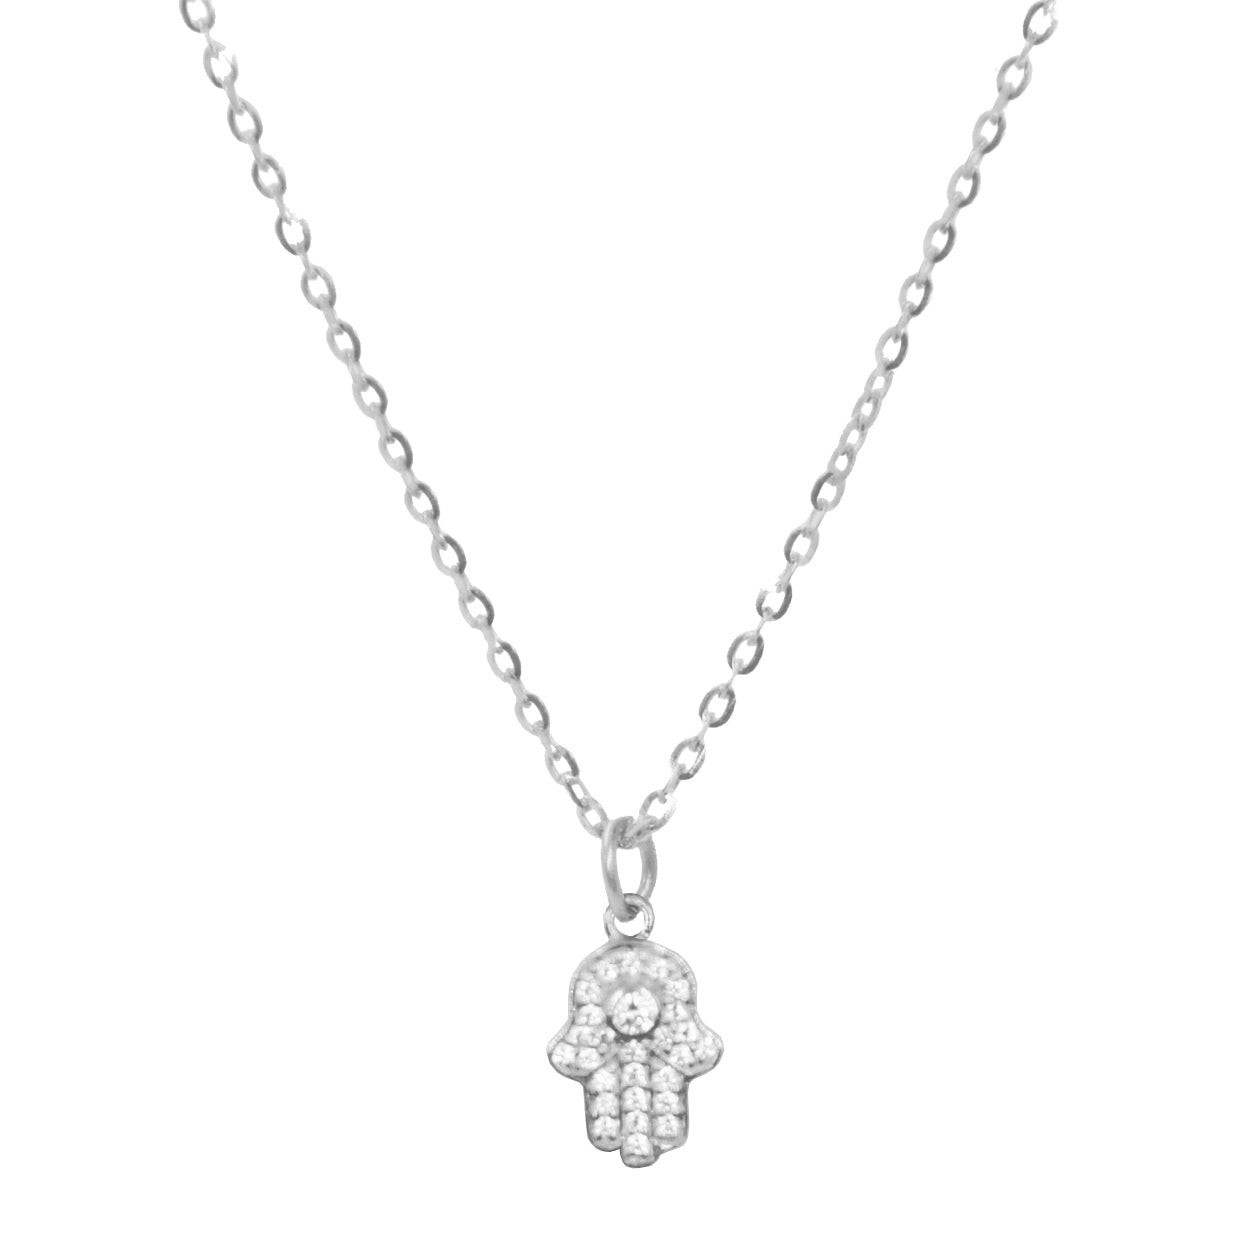 Mini Hamsa Hand Necklace With Crystals